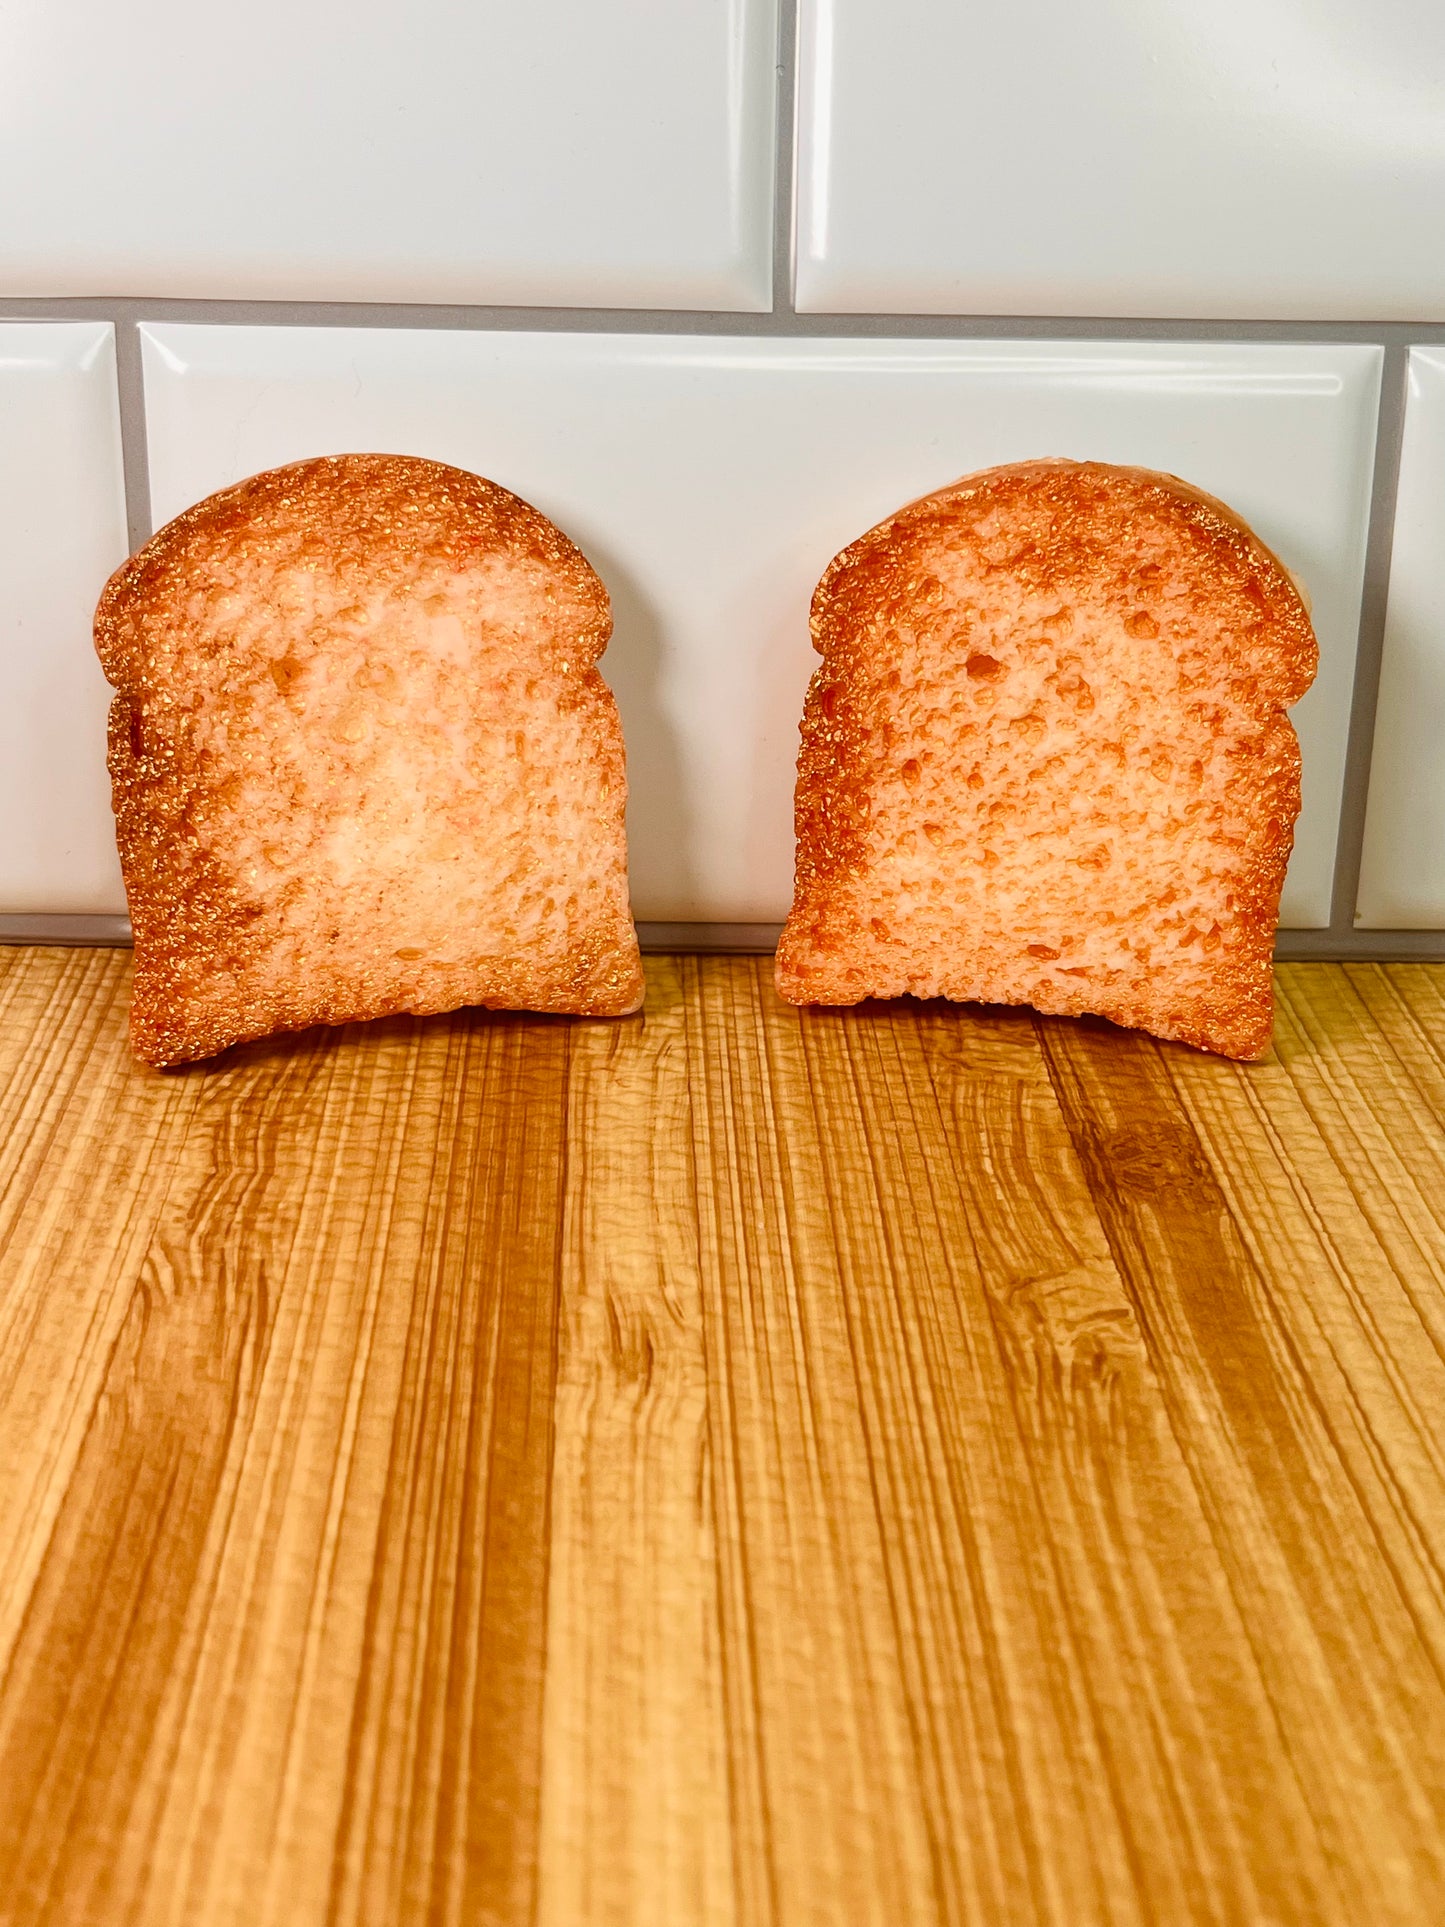 It’s just toast